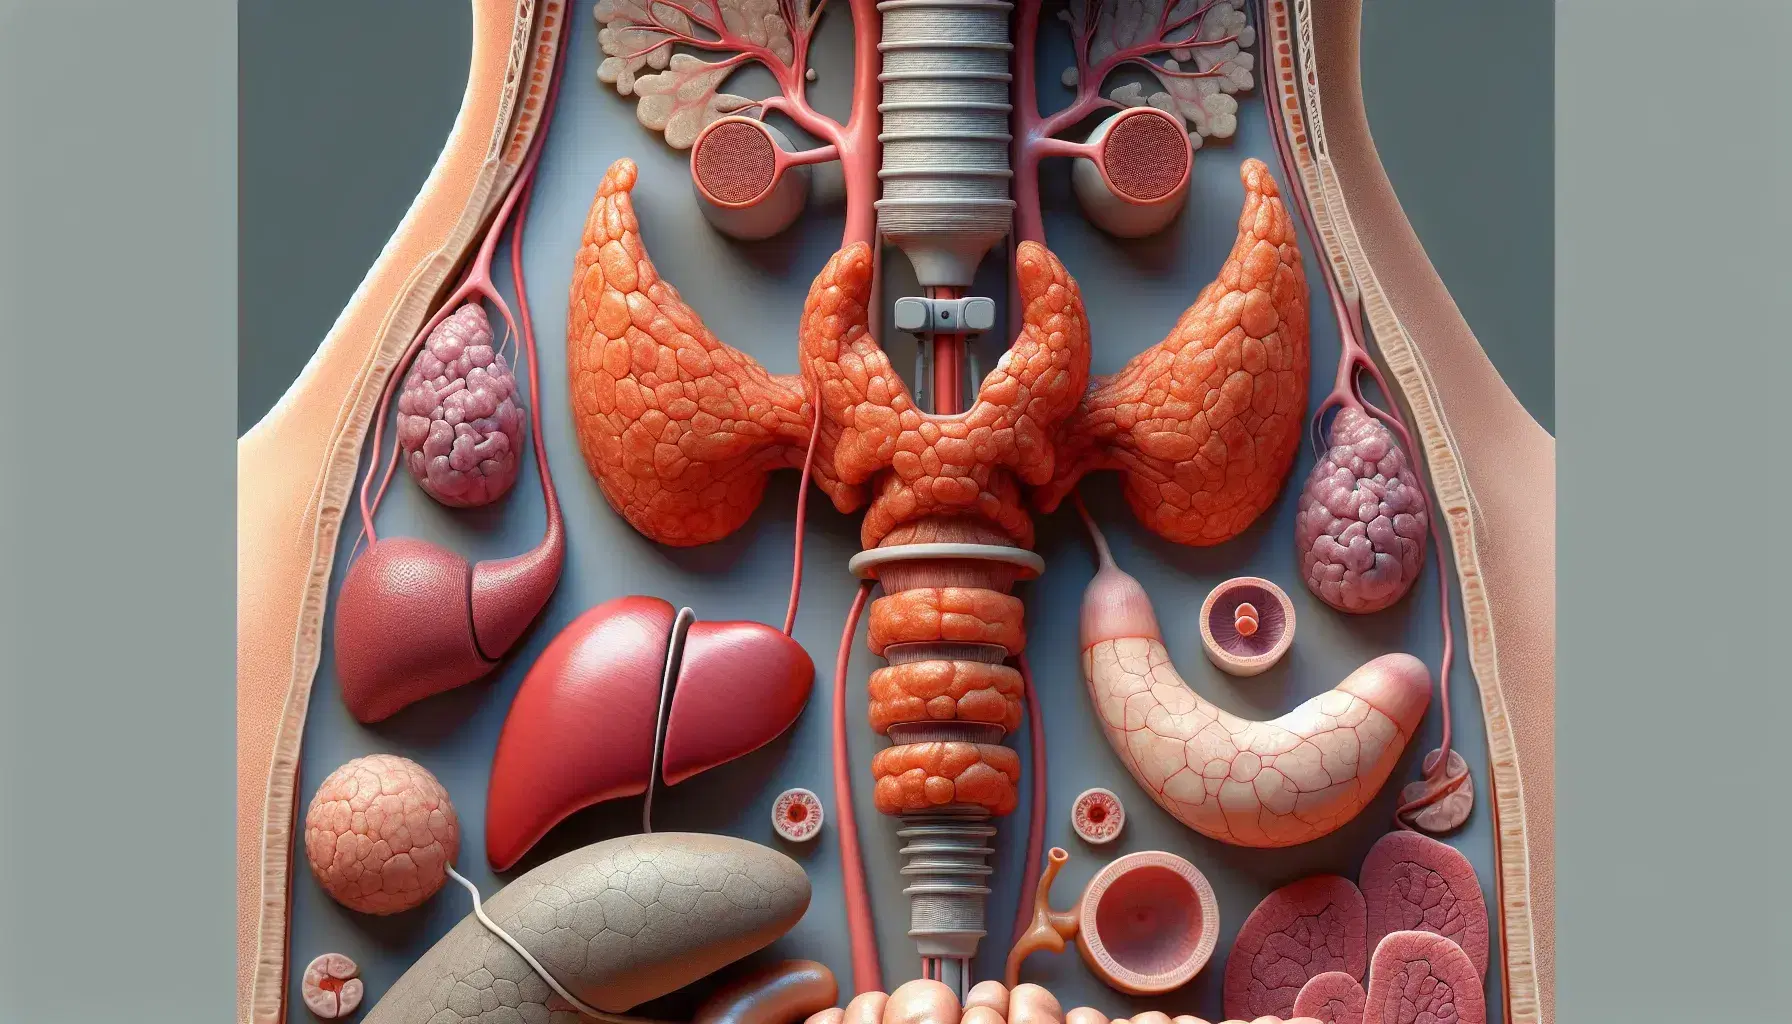 Representación detallada de órganos del sistema endocrino, incluyendo la glándula pituitaria, tiroides, paratiroides, páncreas con islotes de Langerhans y glándula suprarrenal sobre riñón.